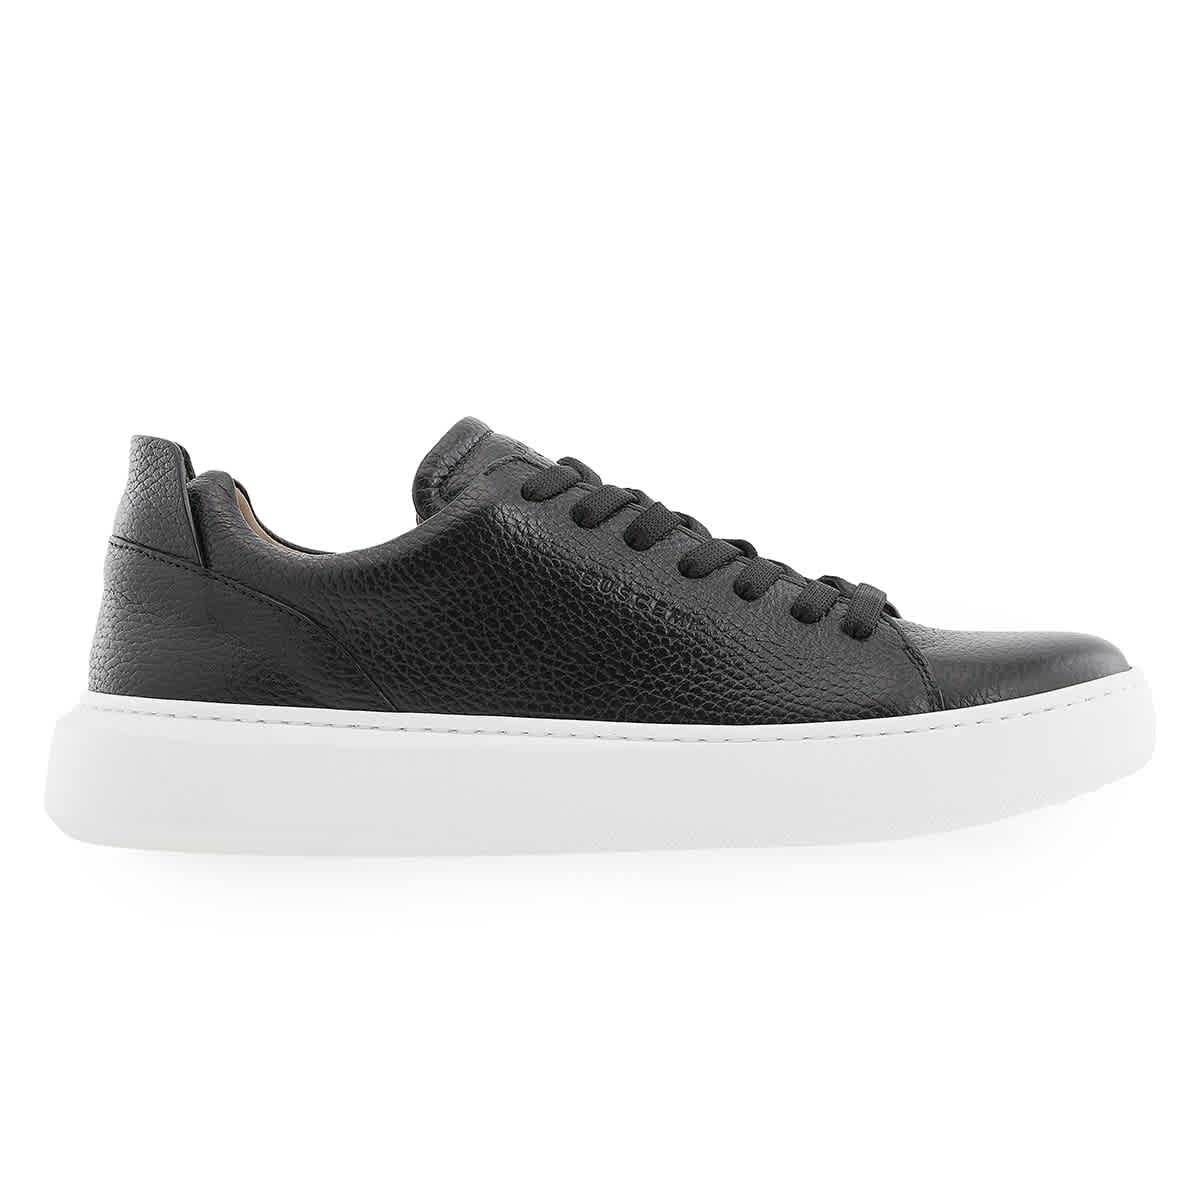 Buscemi Ladies Footwear Bcs22725 009 In Black